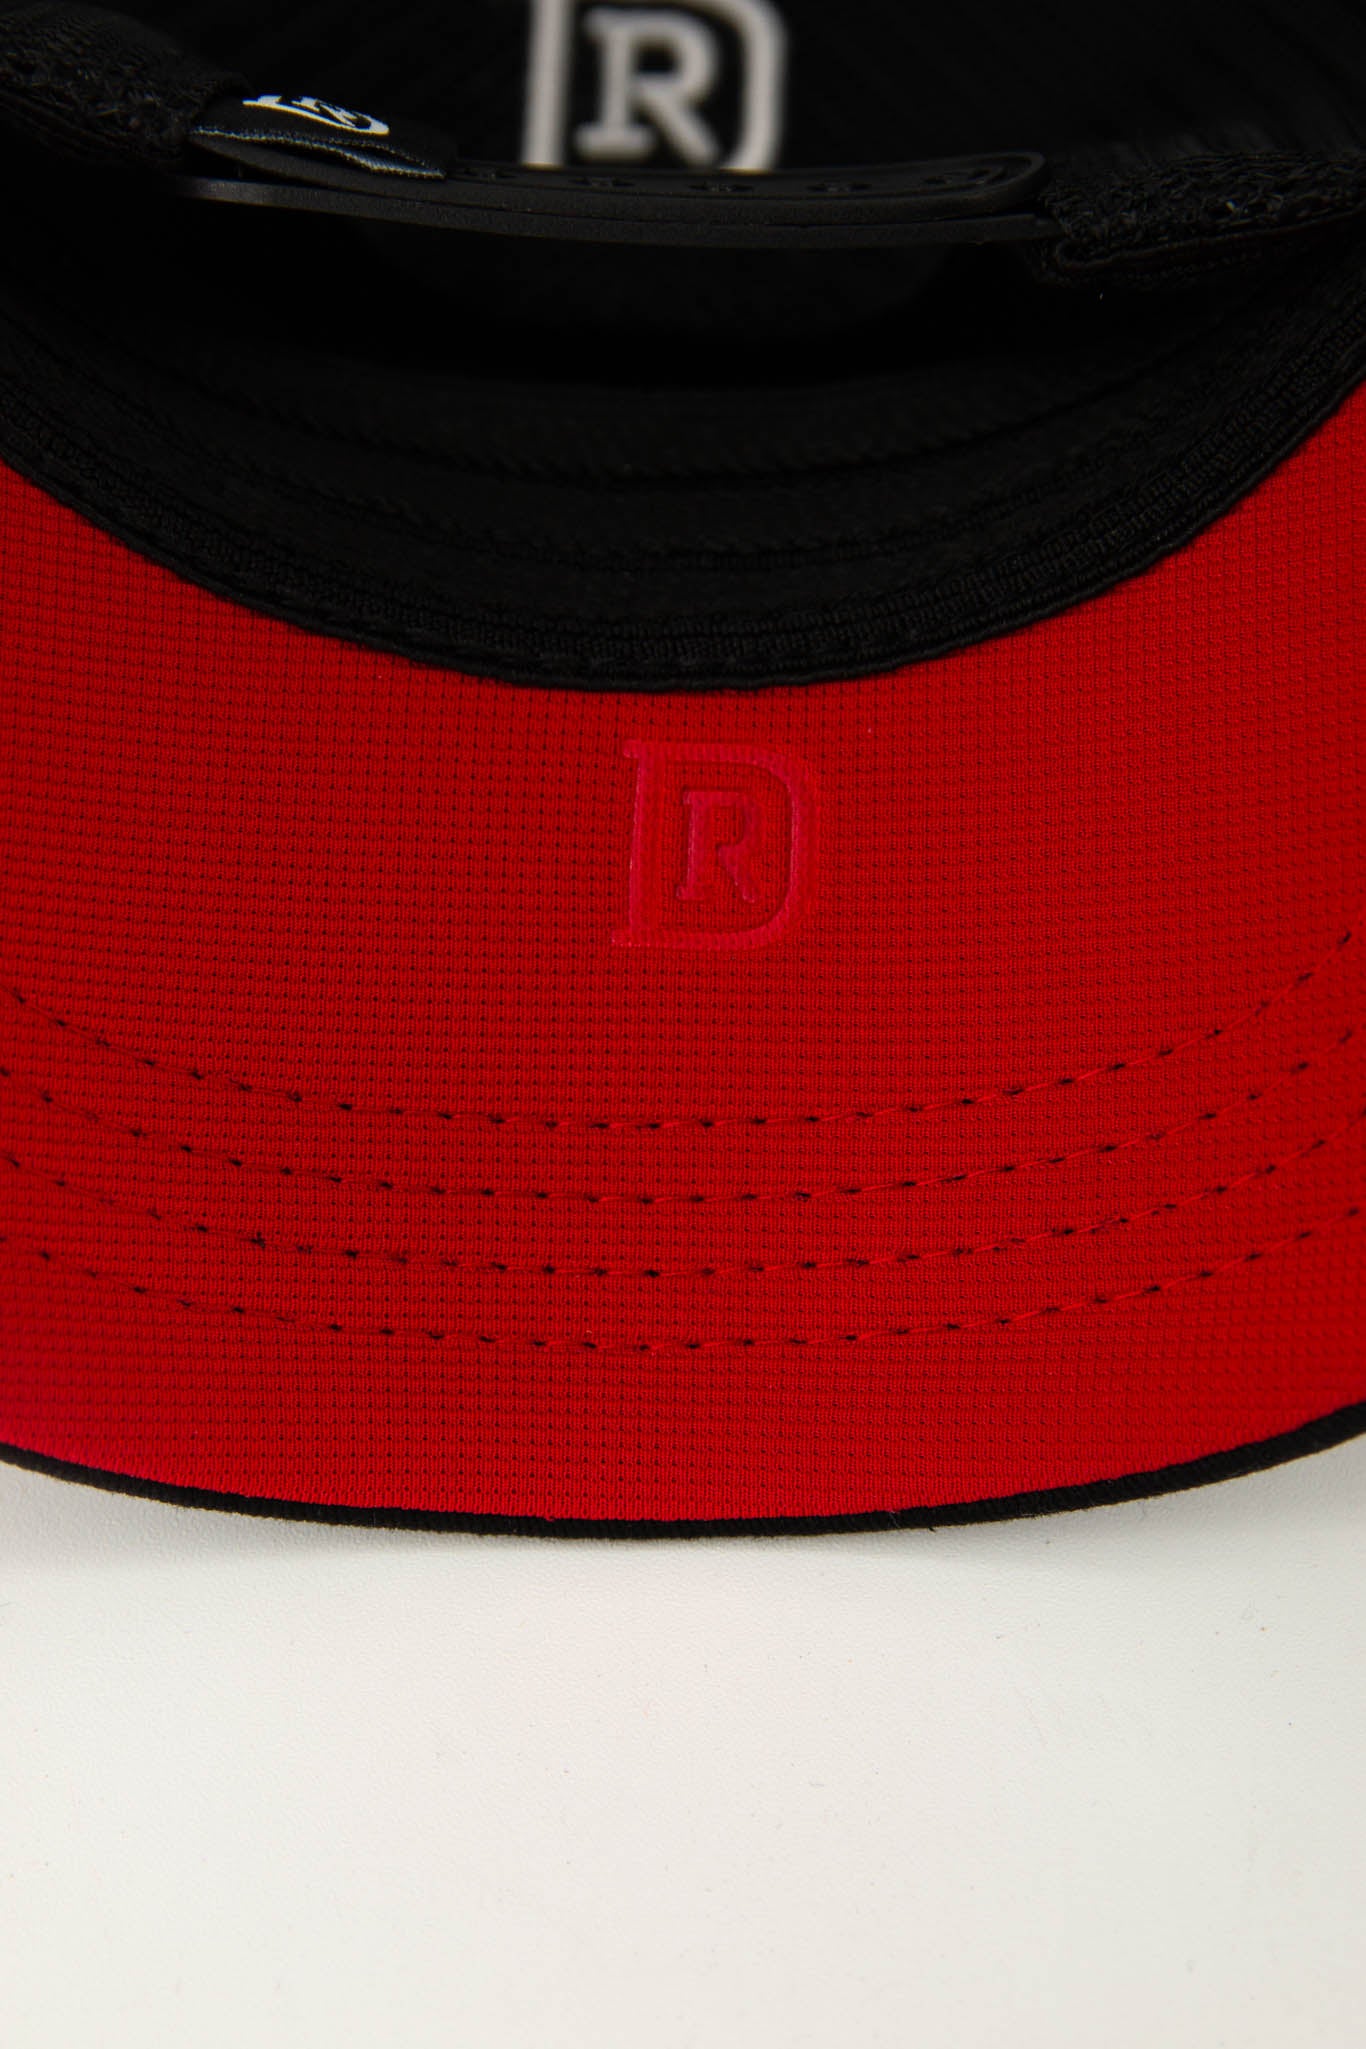 Red Angus Hat - De Registro Brand